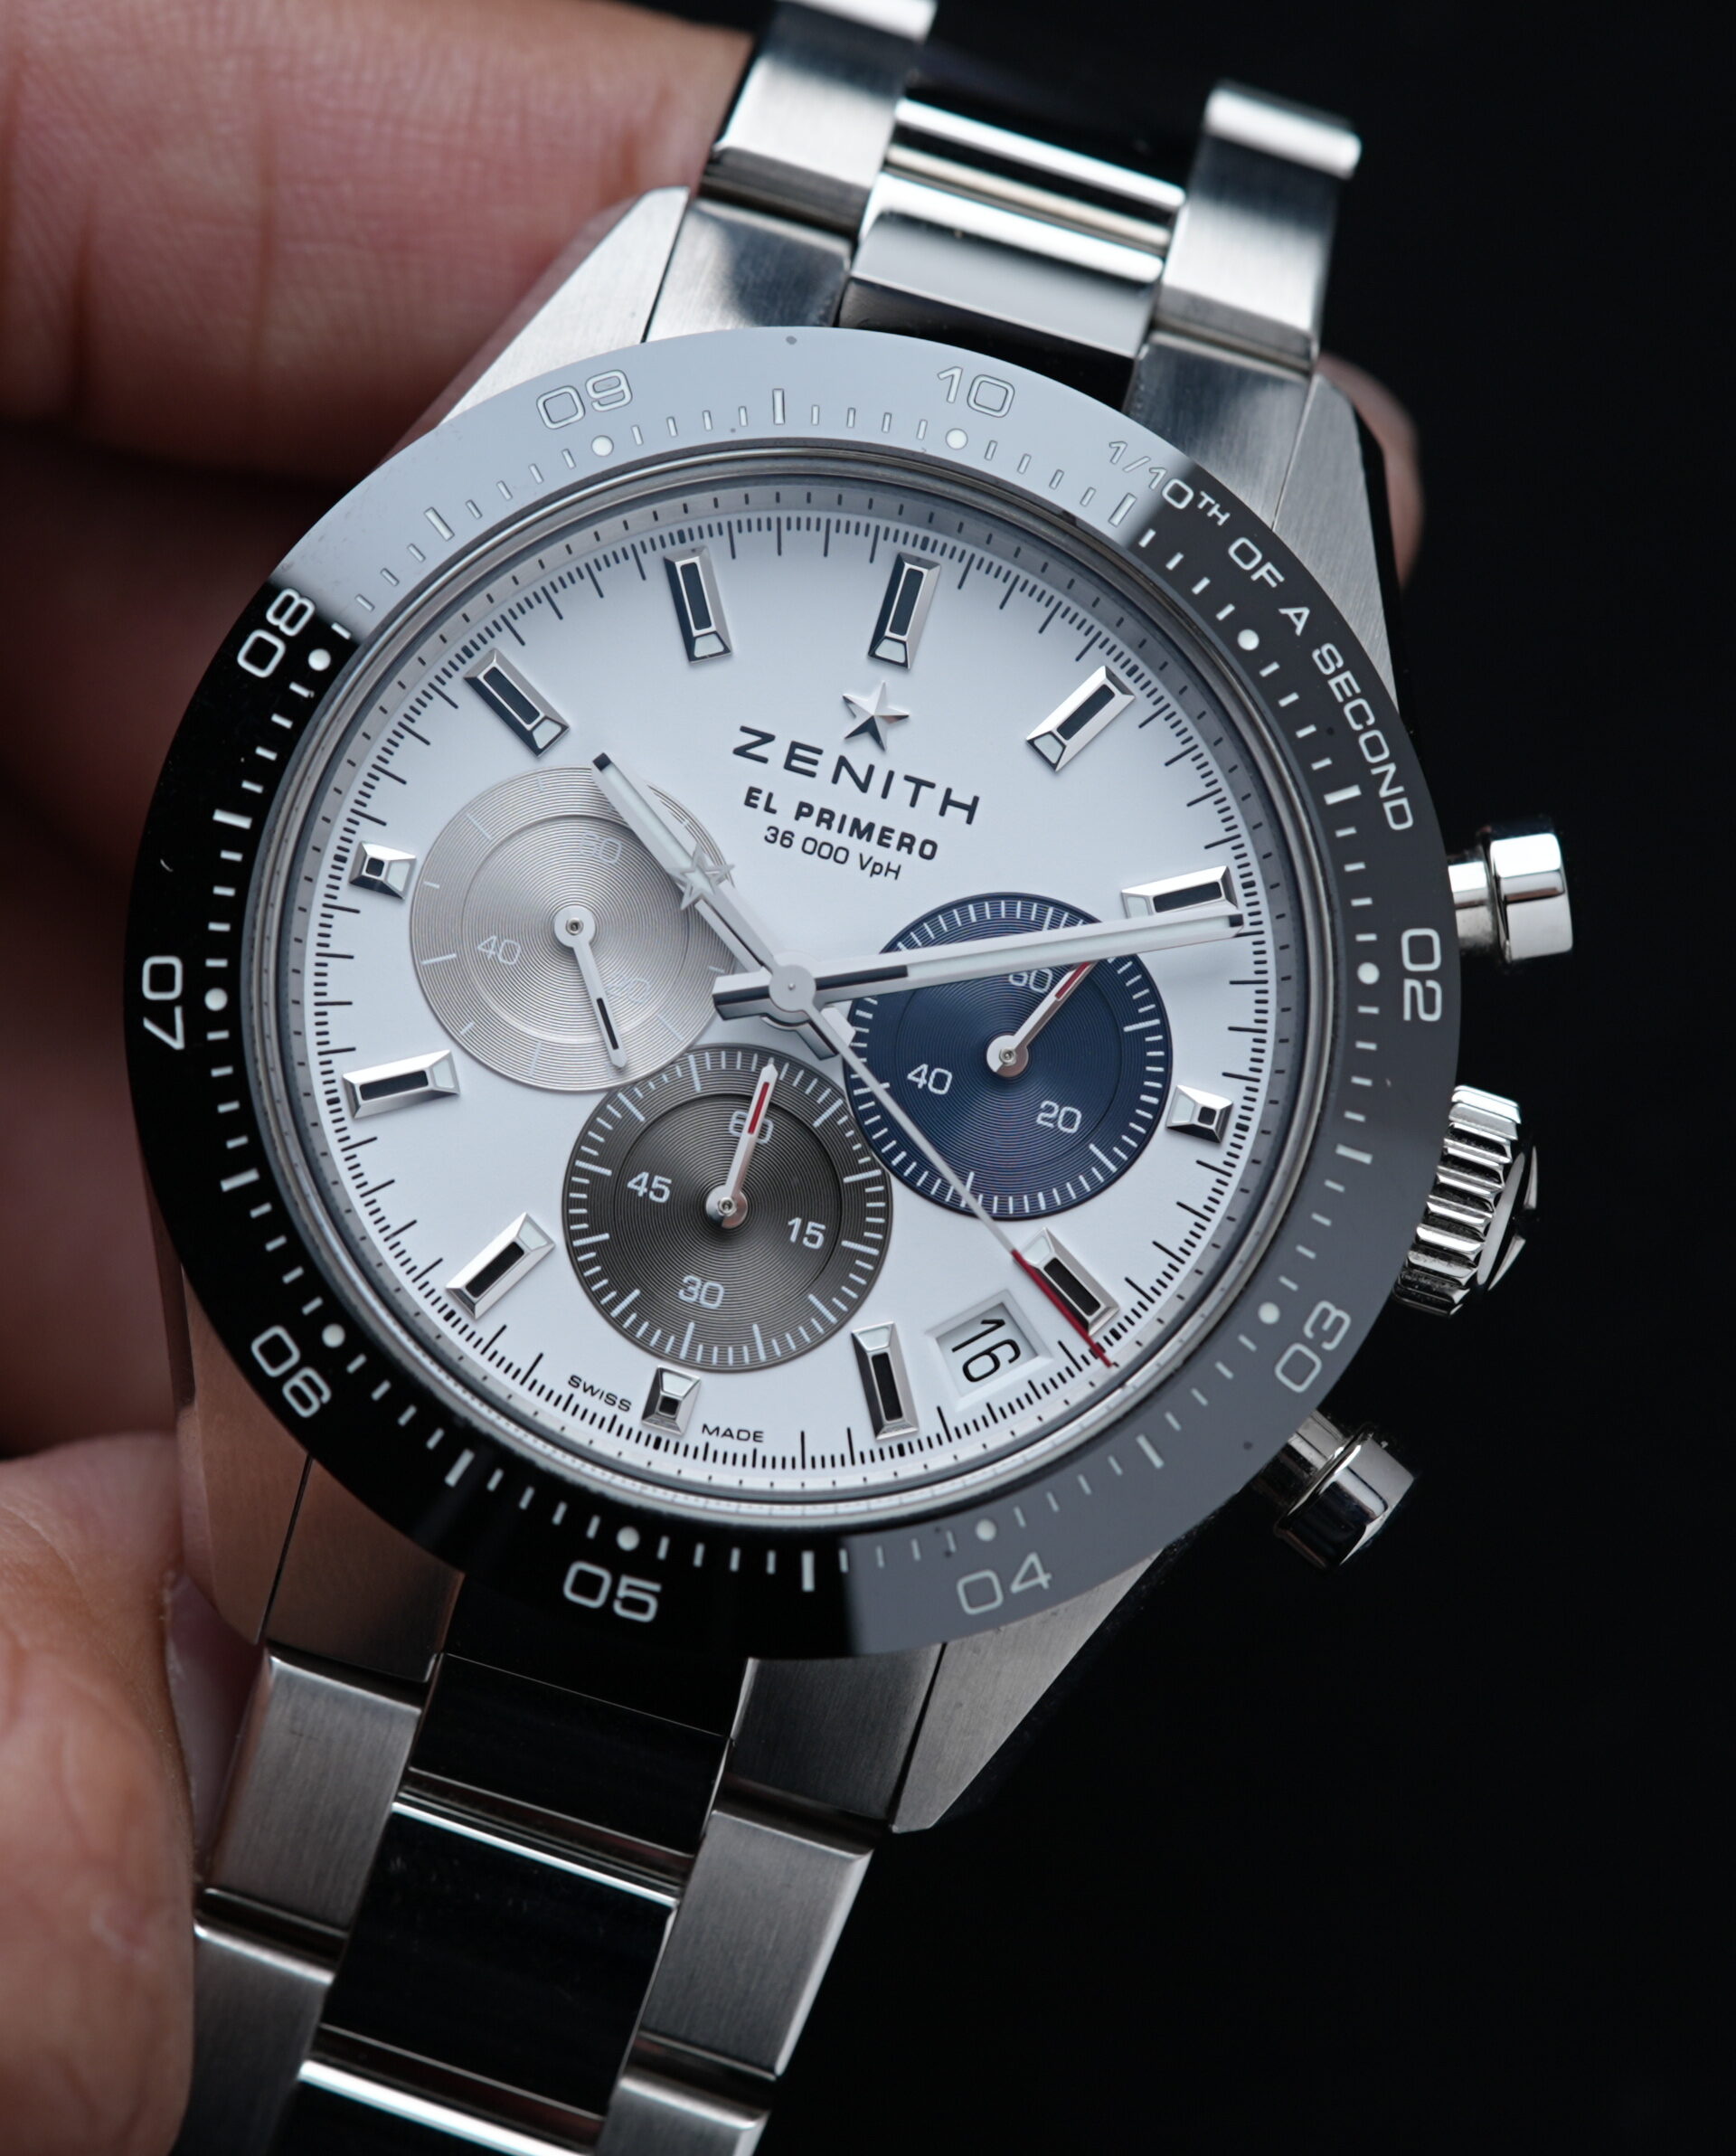 Zenith Chronomaster Sport Panda watch being displayed in hand.